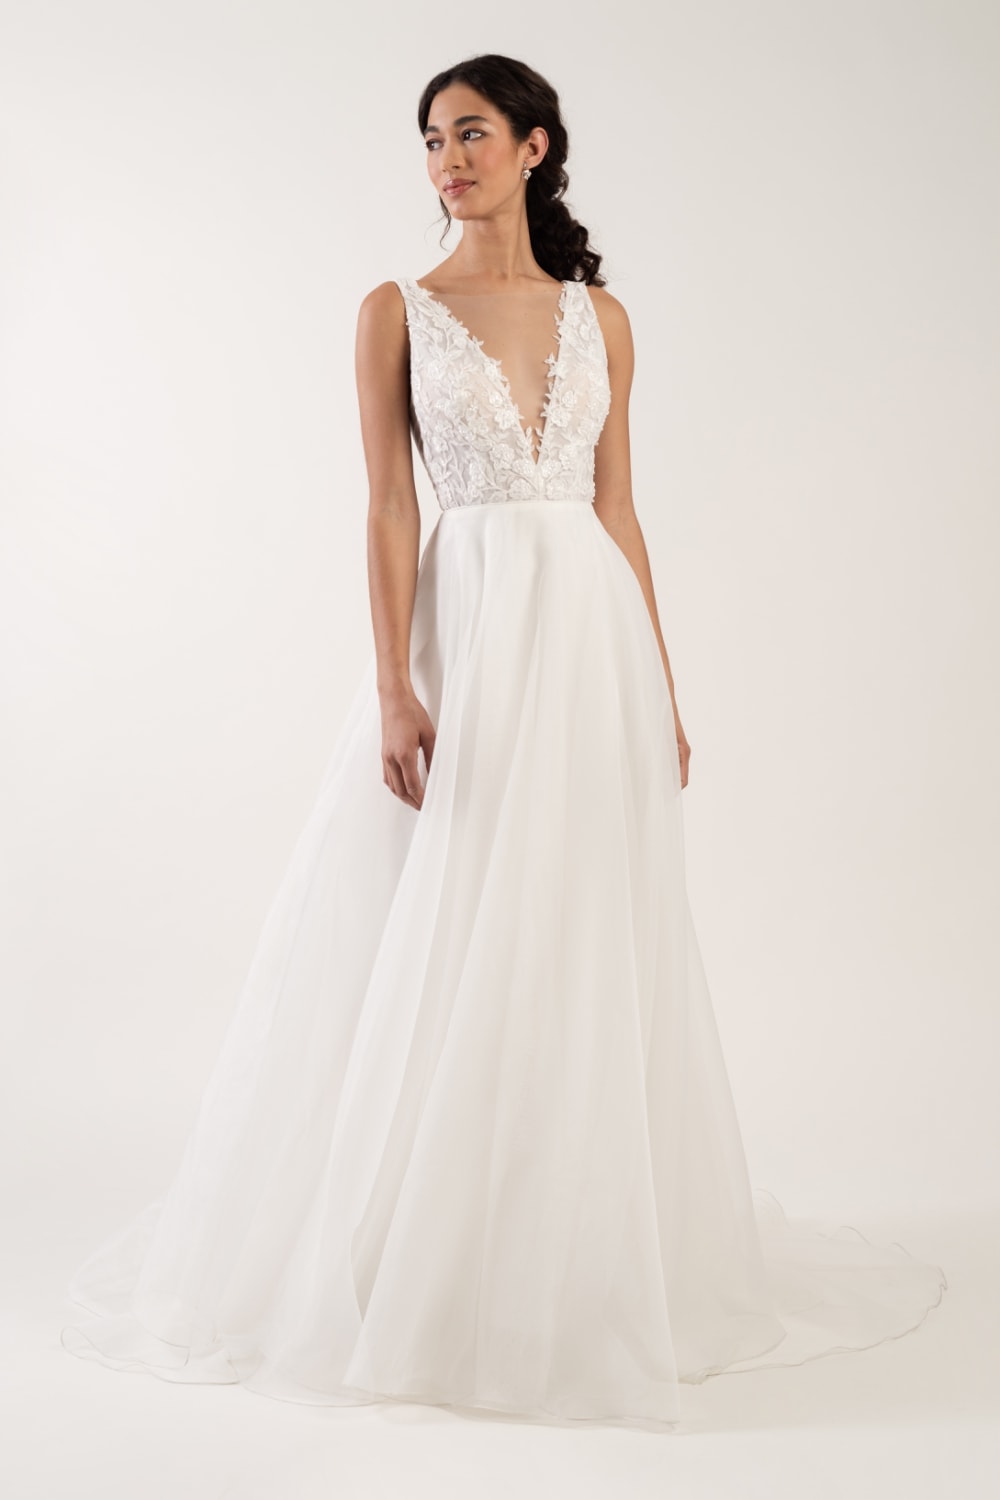 Jenny by Jenny Yoo Wedding Dresses Fall 2019 - Dress for the Wedding